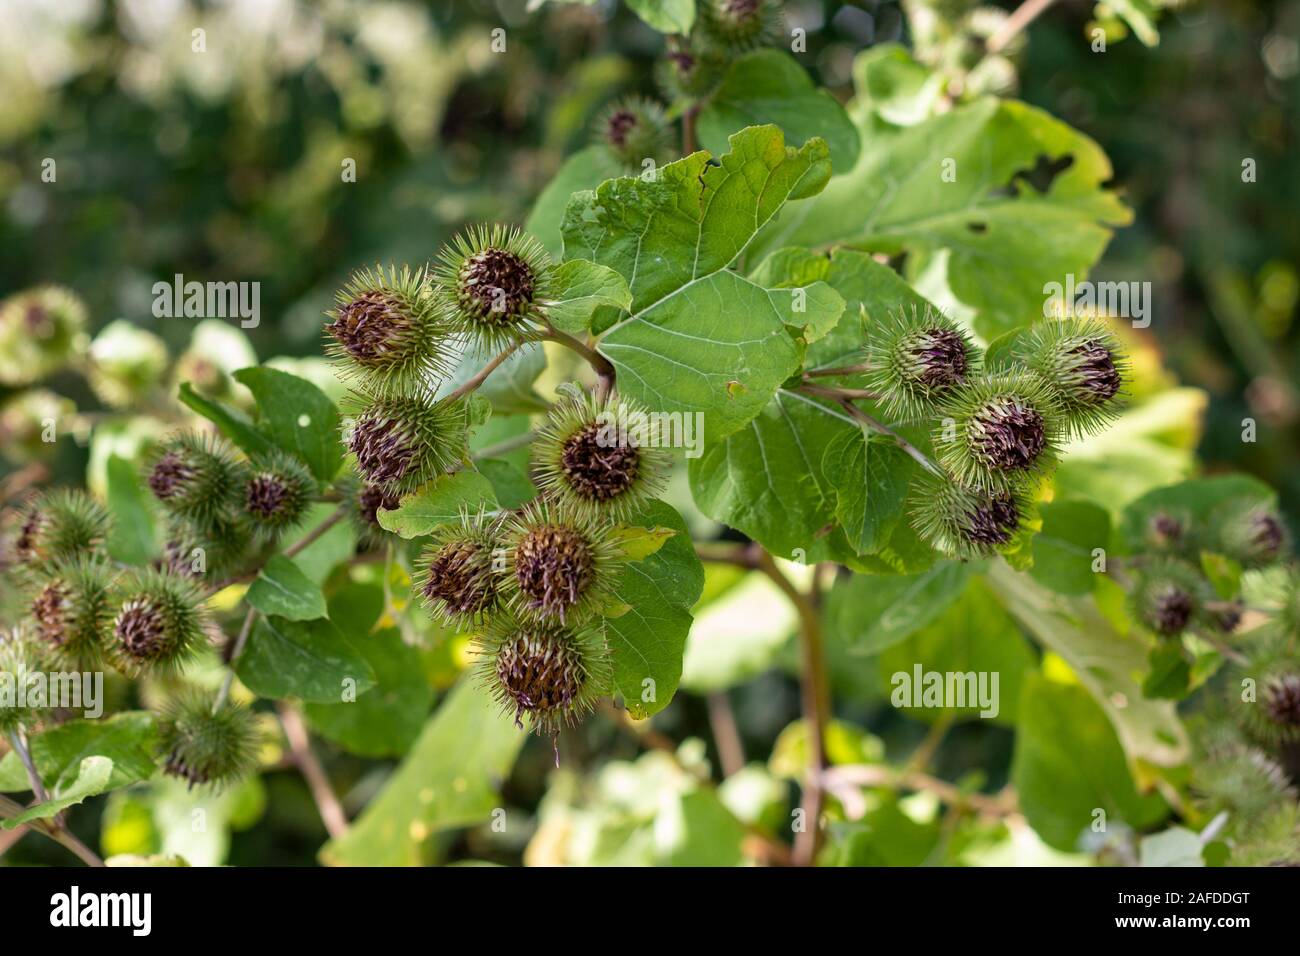 Wild velcro plant in detail Stock Photo - Alamy